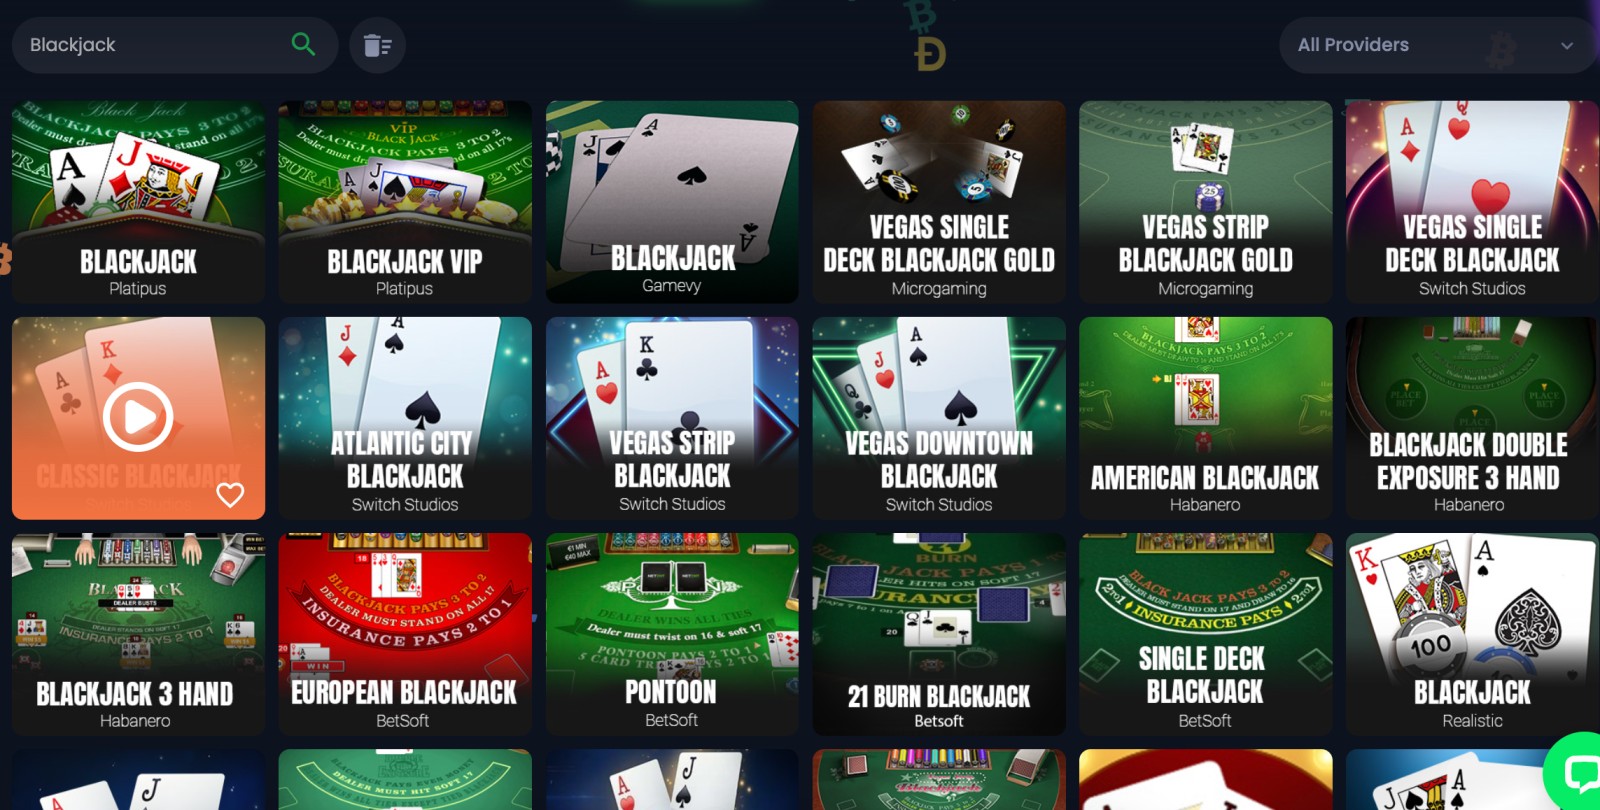 Jackbit blackjack games